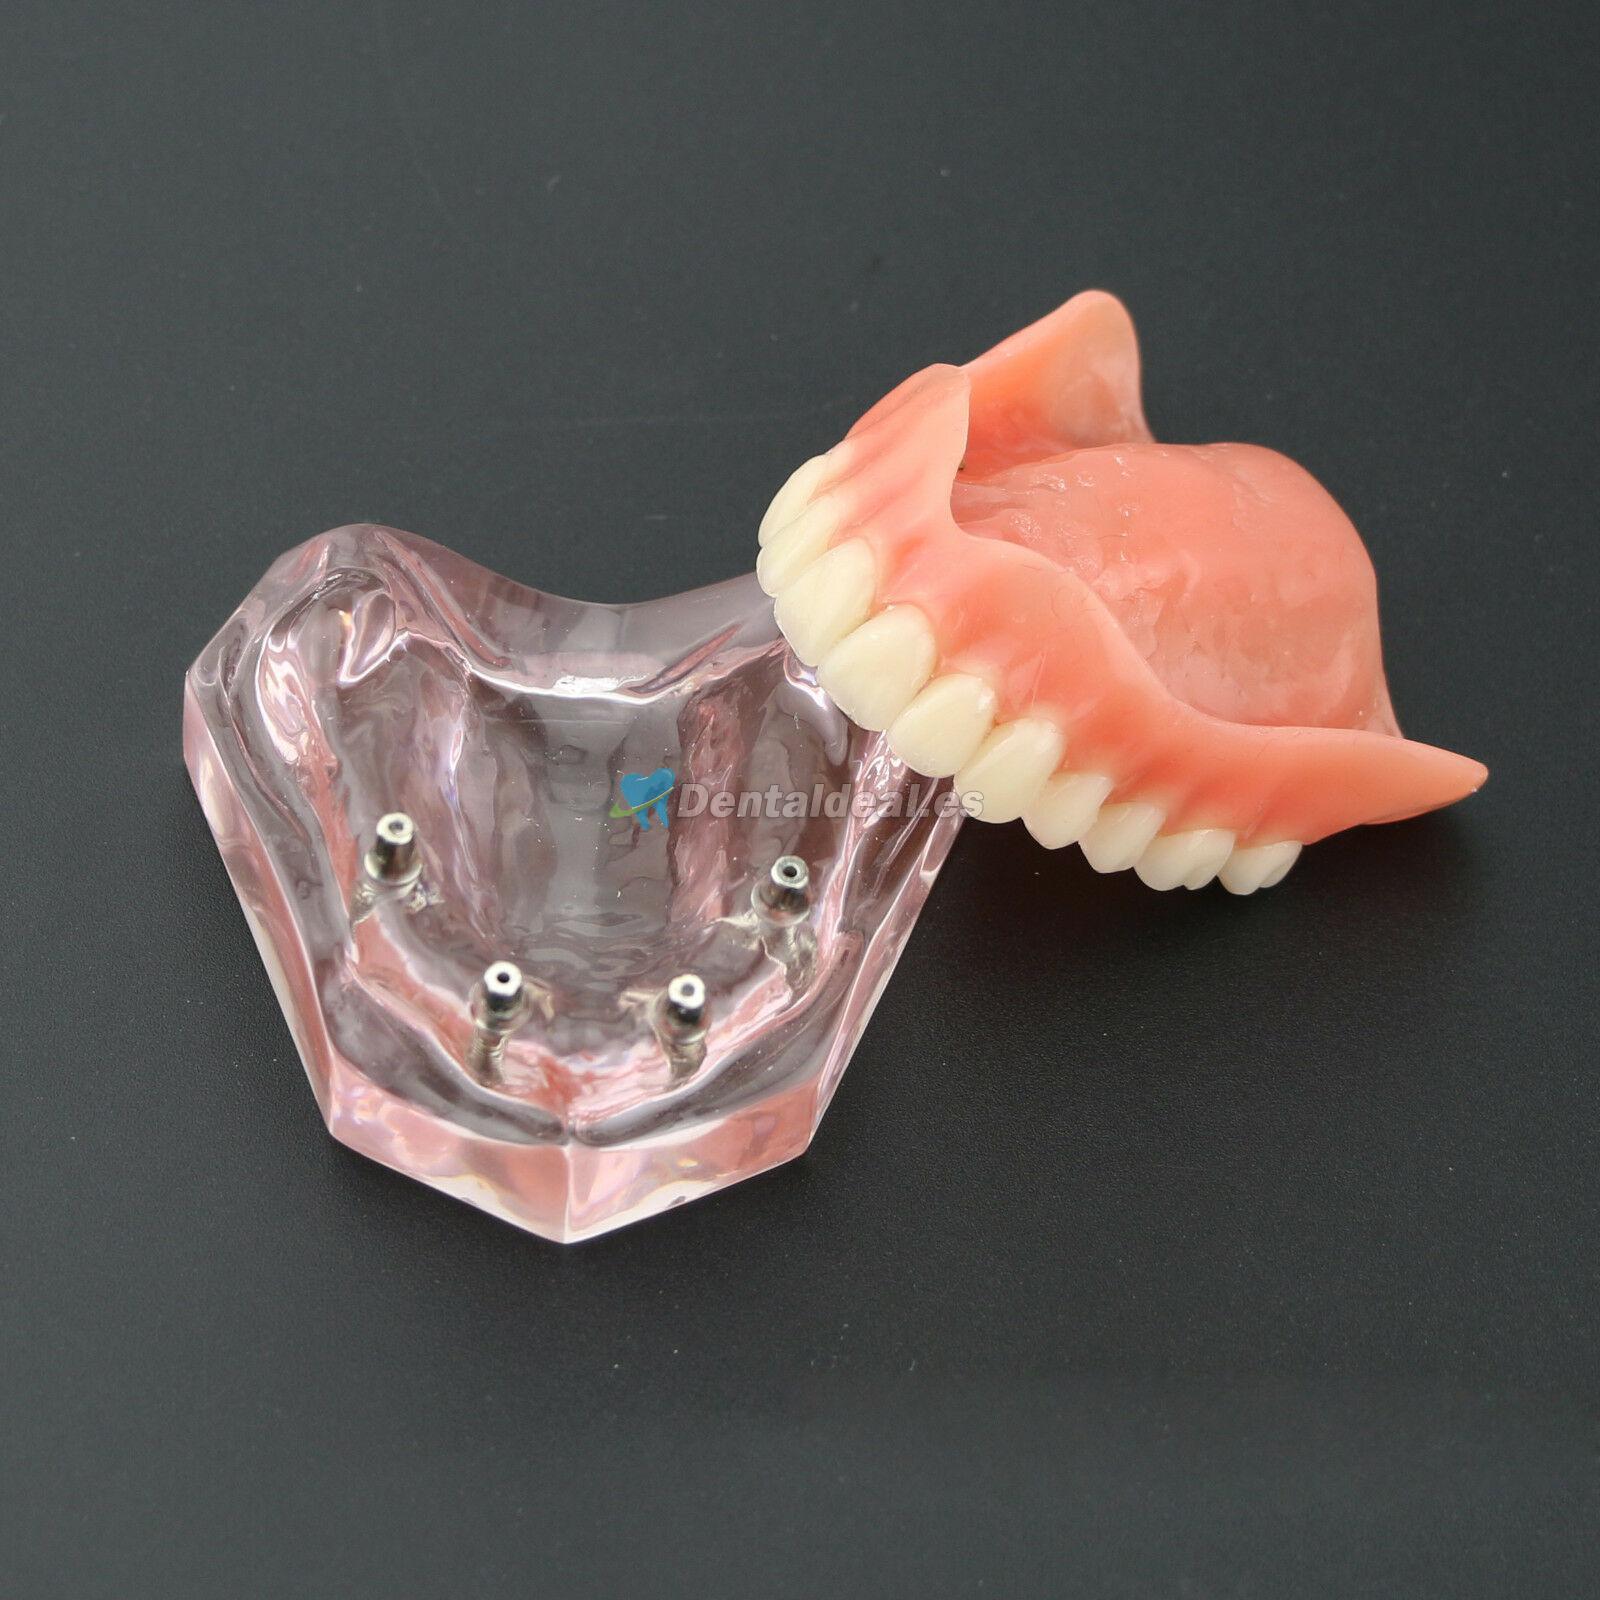 Dental 4 implantes Demostración Modelo de sobredentadura 6001 01